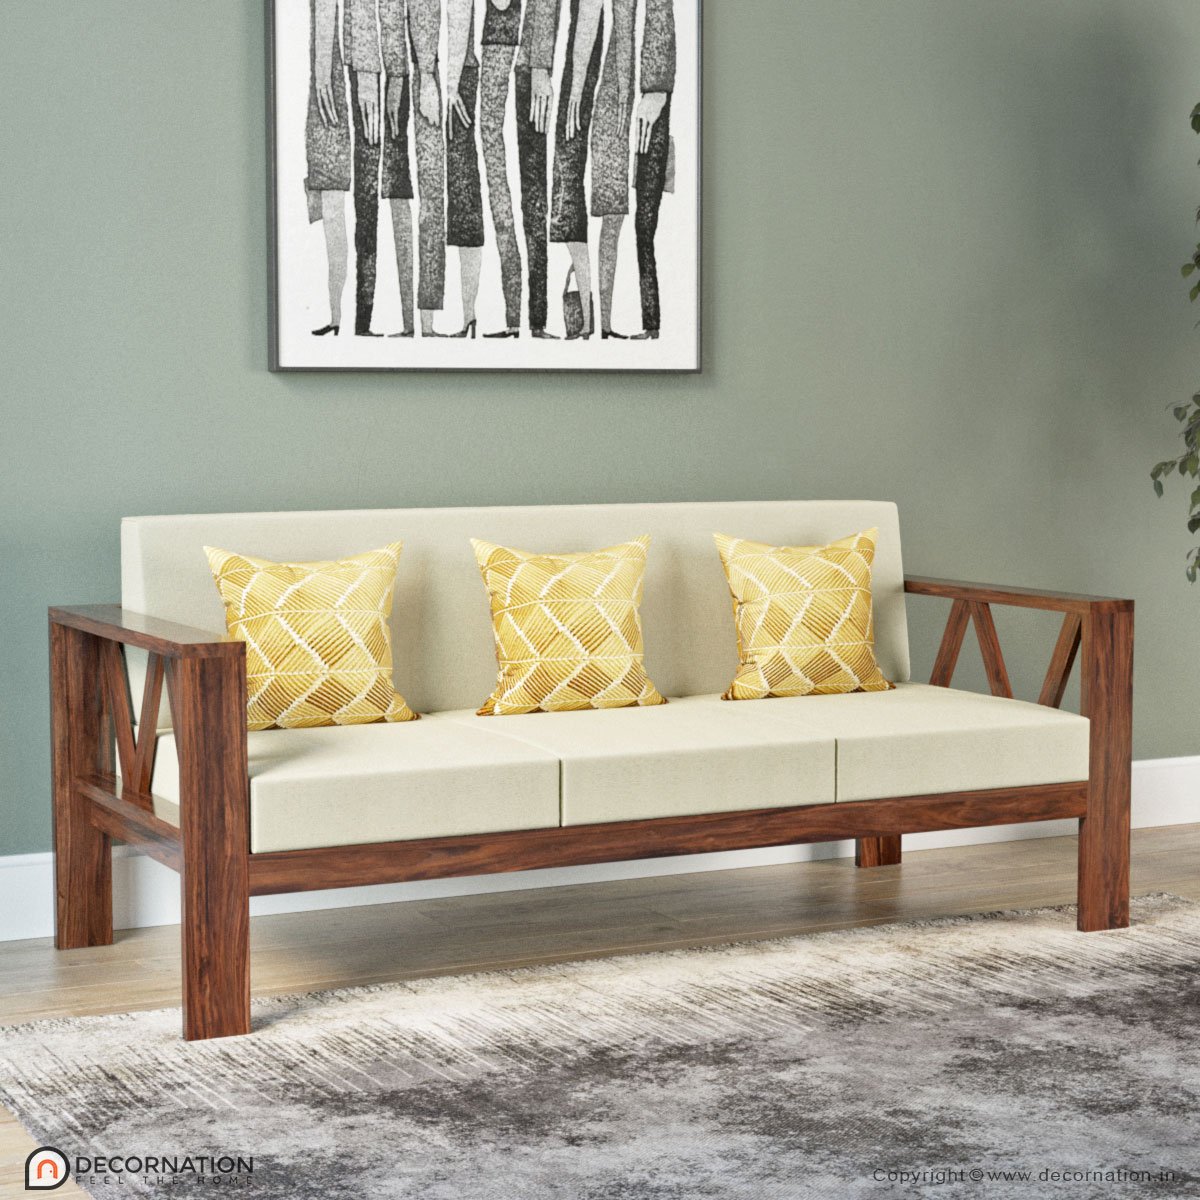 Livia 7 Seater Sofa Set – 3 Seater